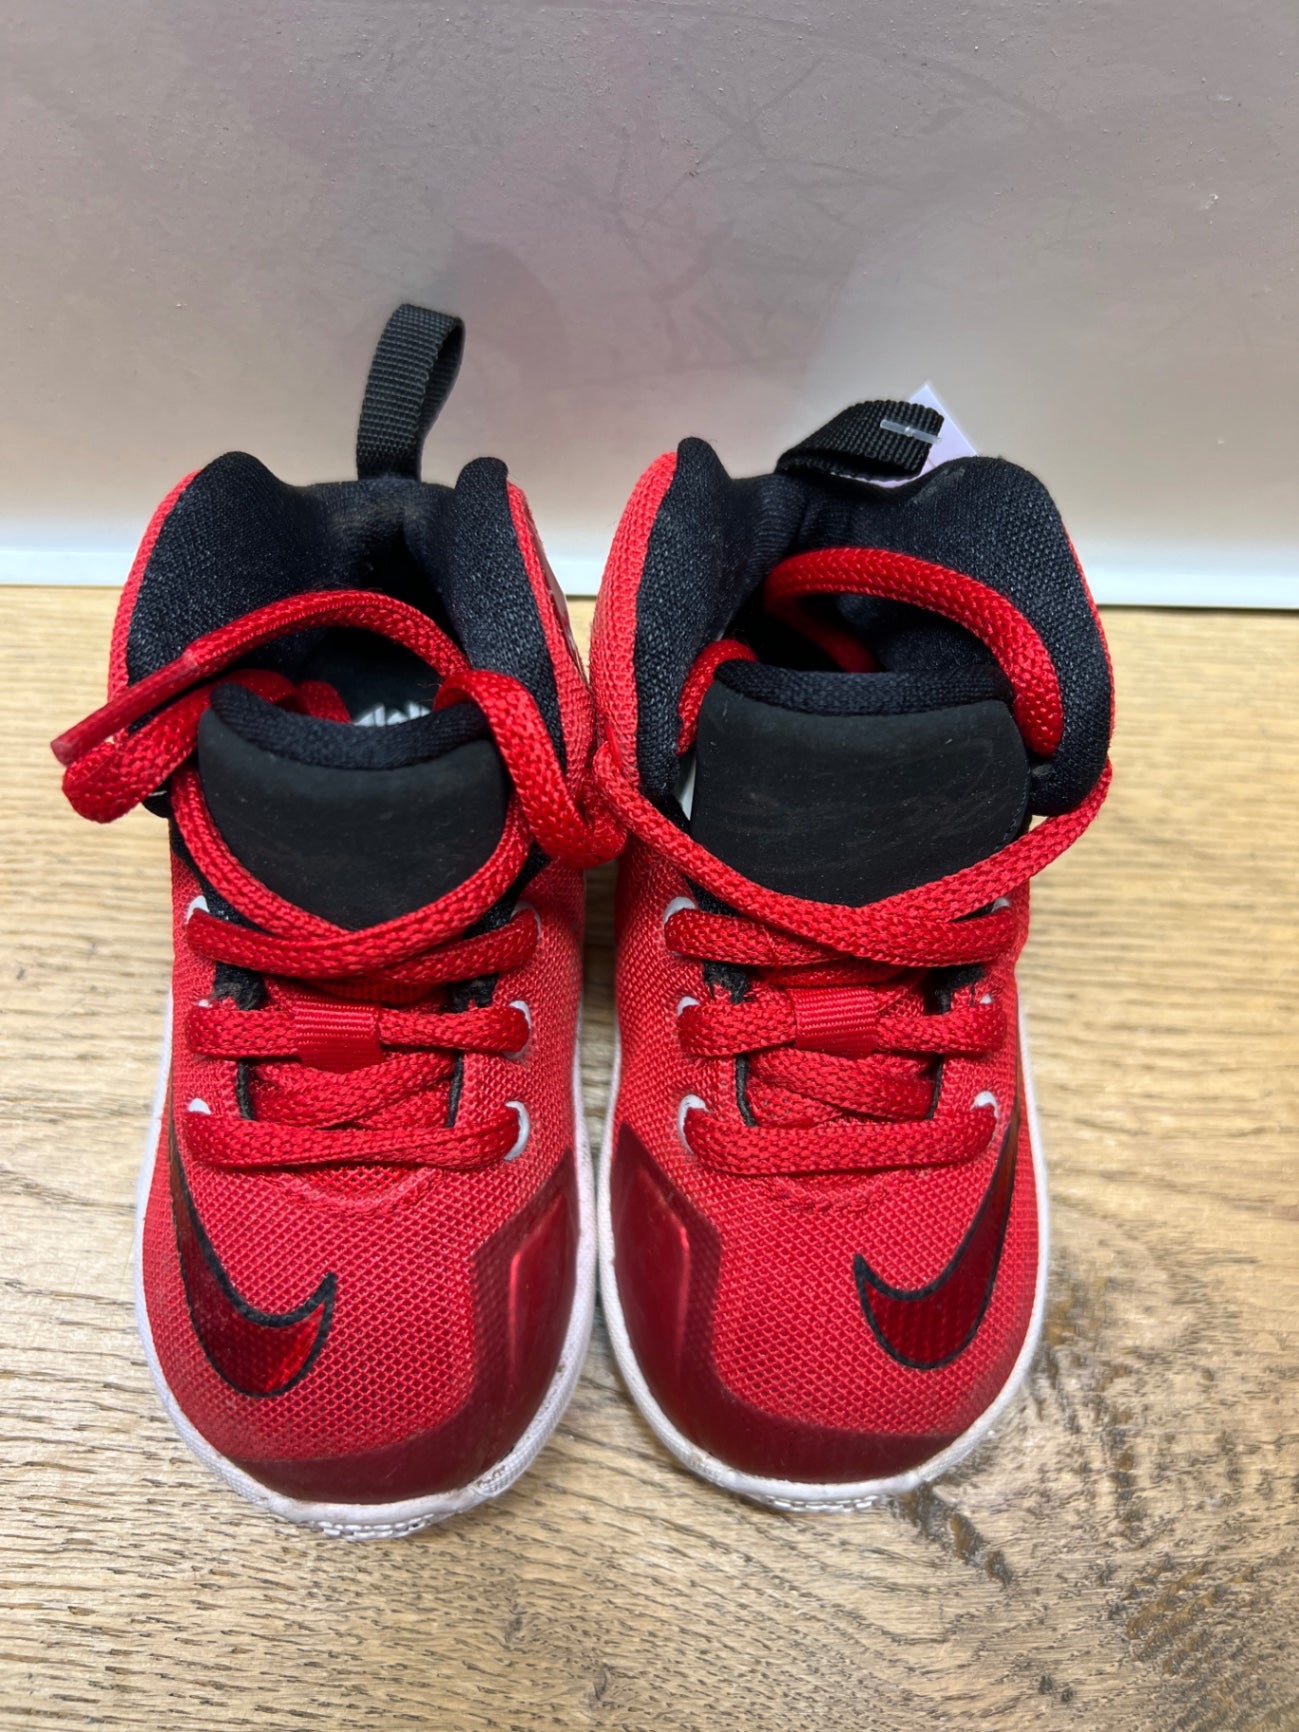 Schuhe, Nike, Rot, 21, halbschuhe z. schnüren (10388582)